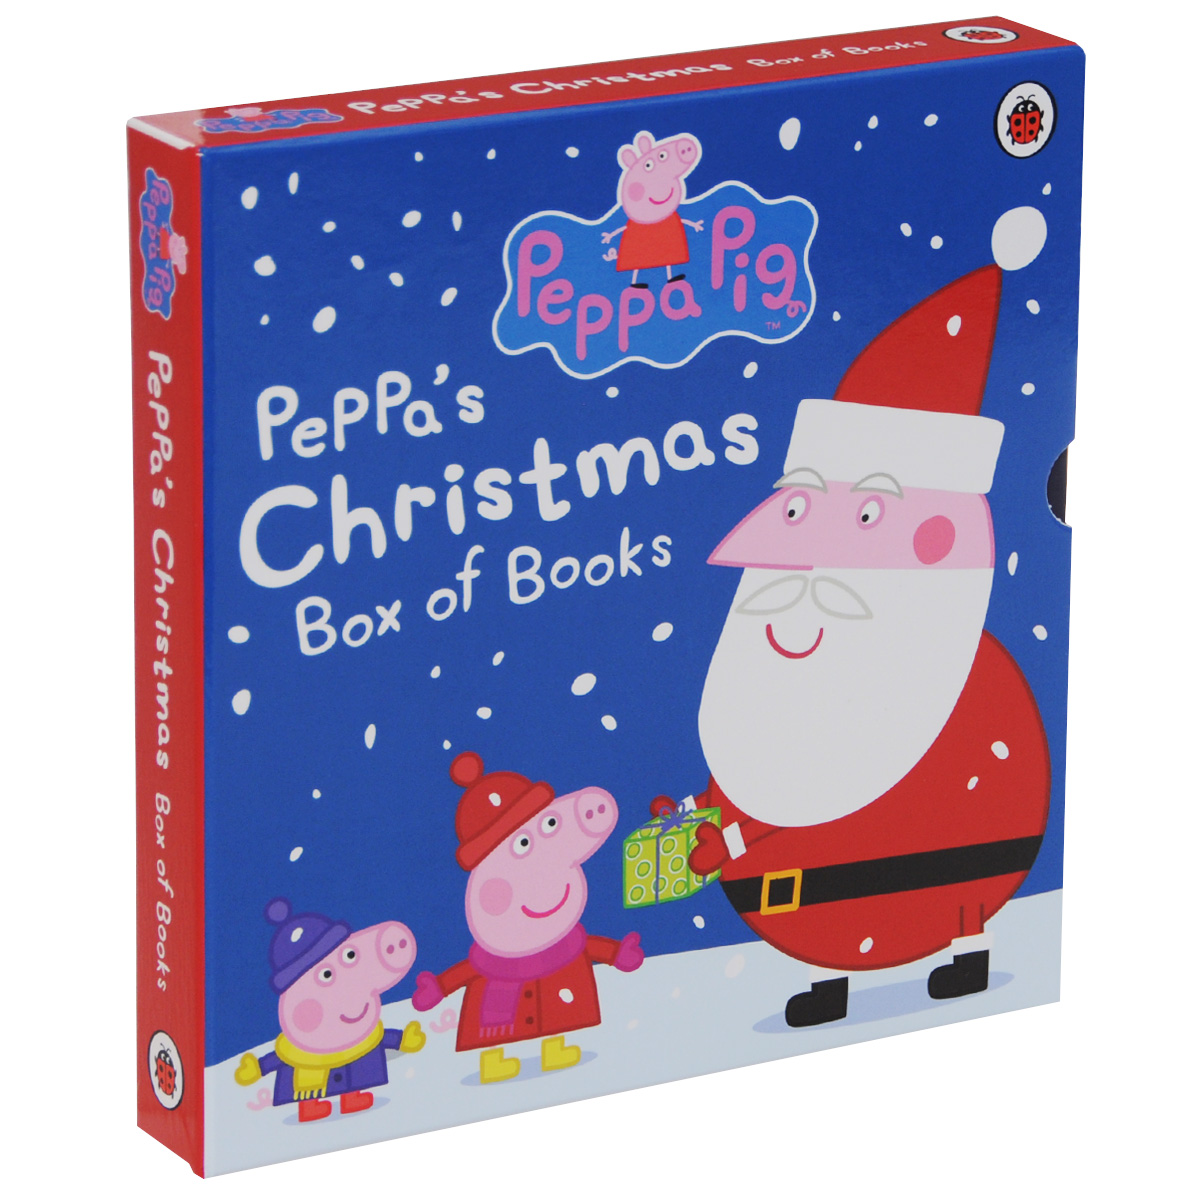 Peppa's Christmas: Box of Books